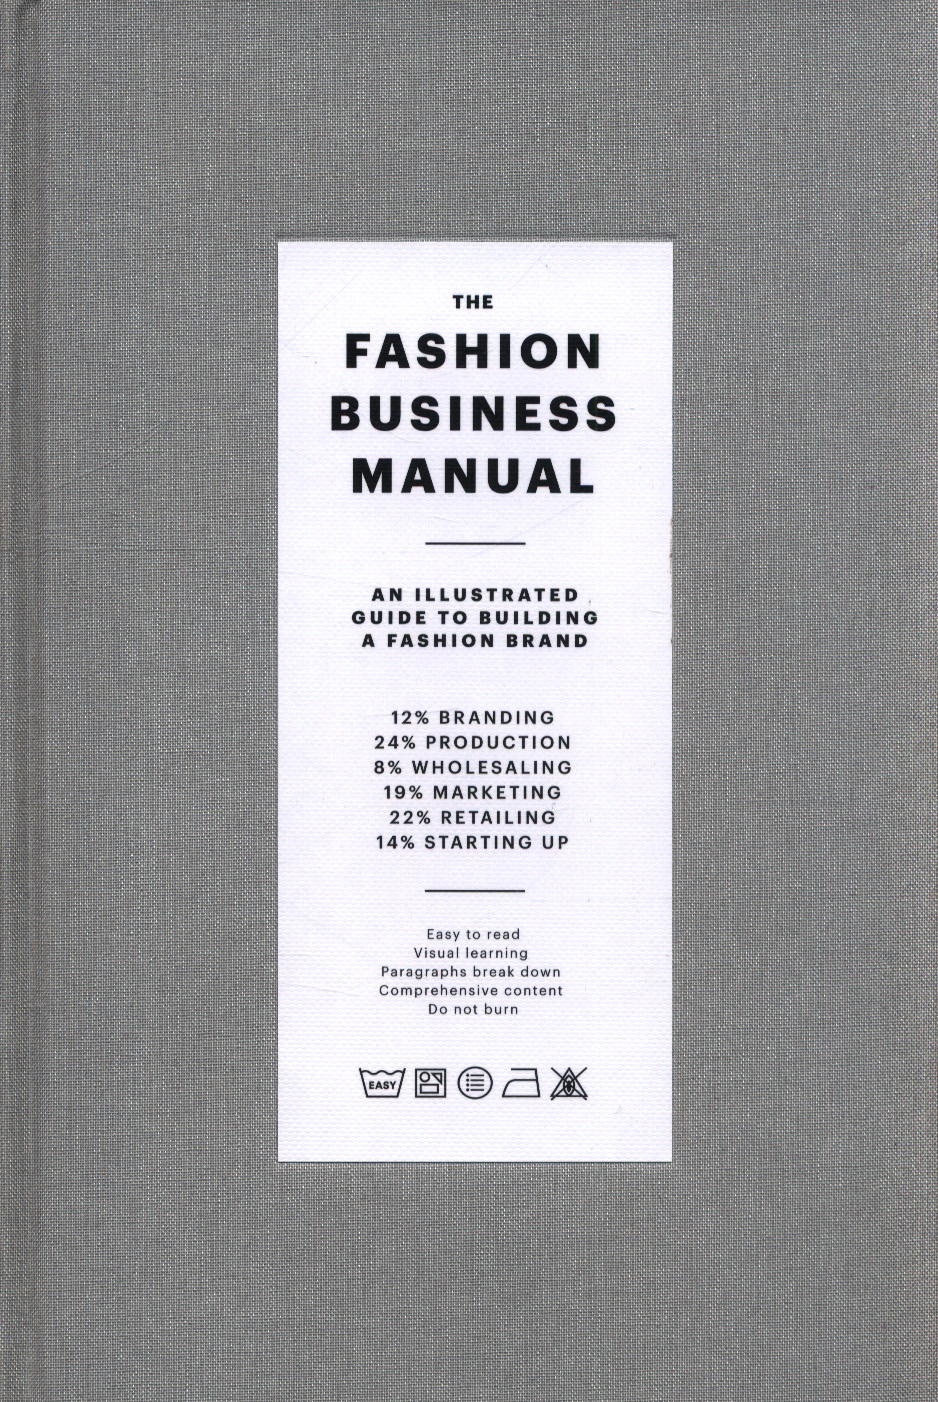 Schoolstoreng Ltd | The Fashion Business Manual